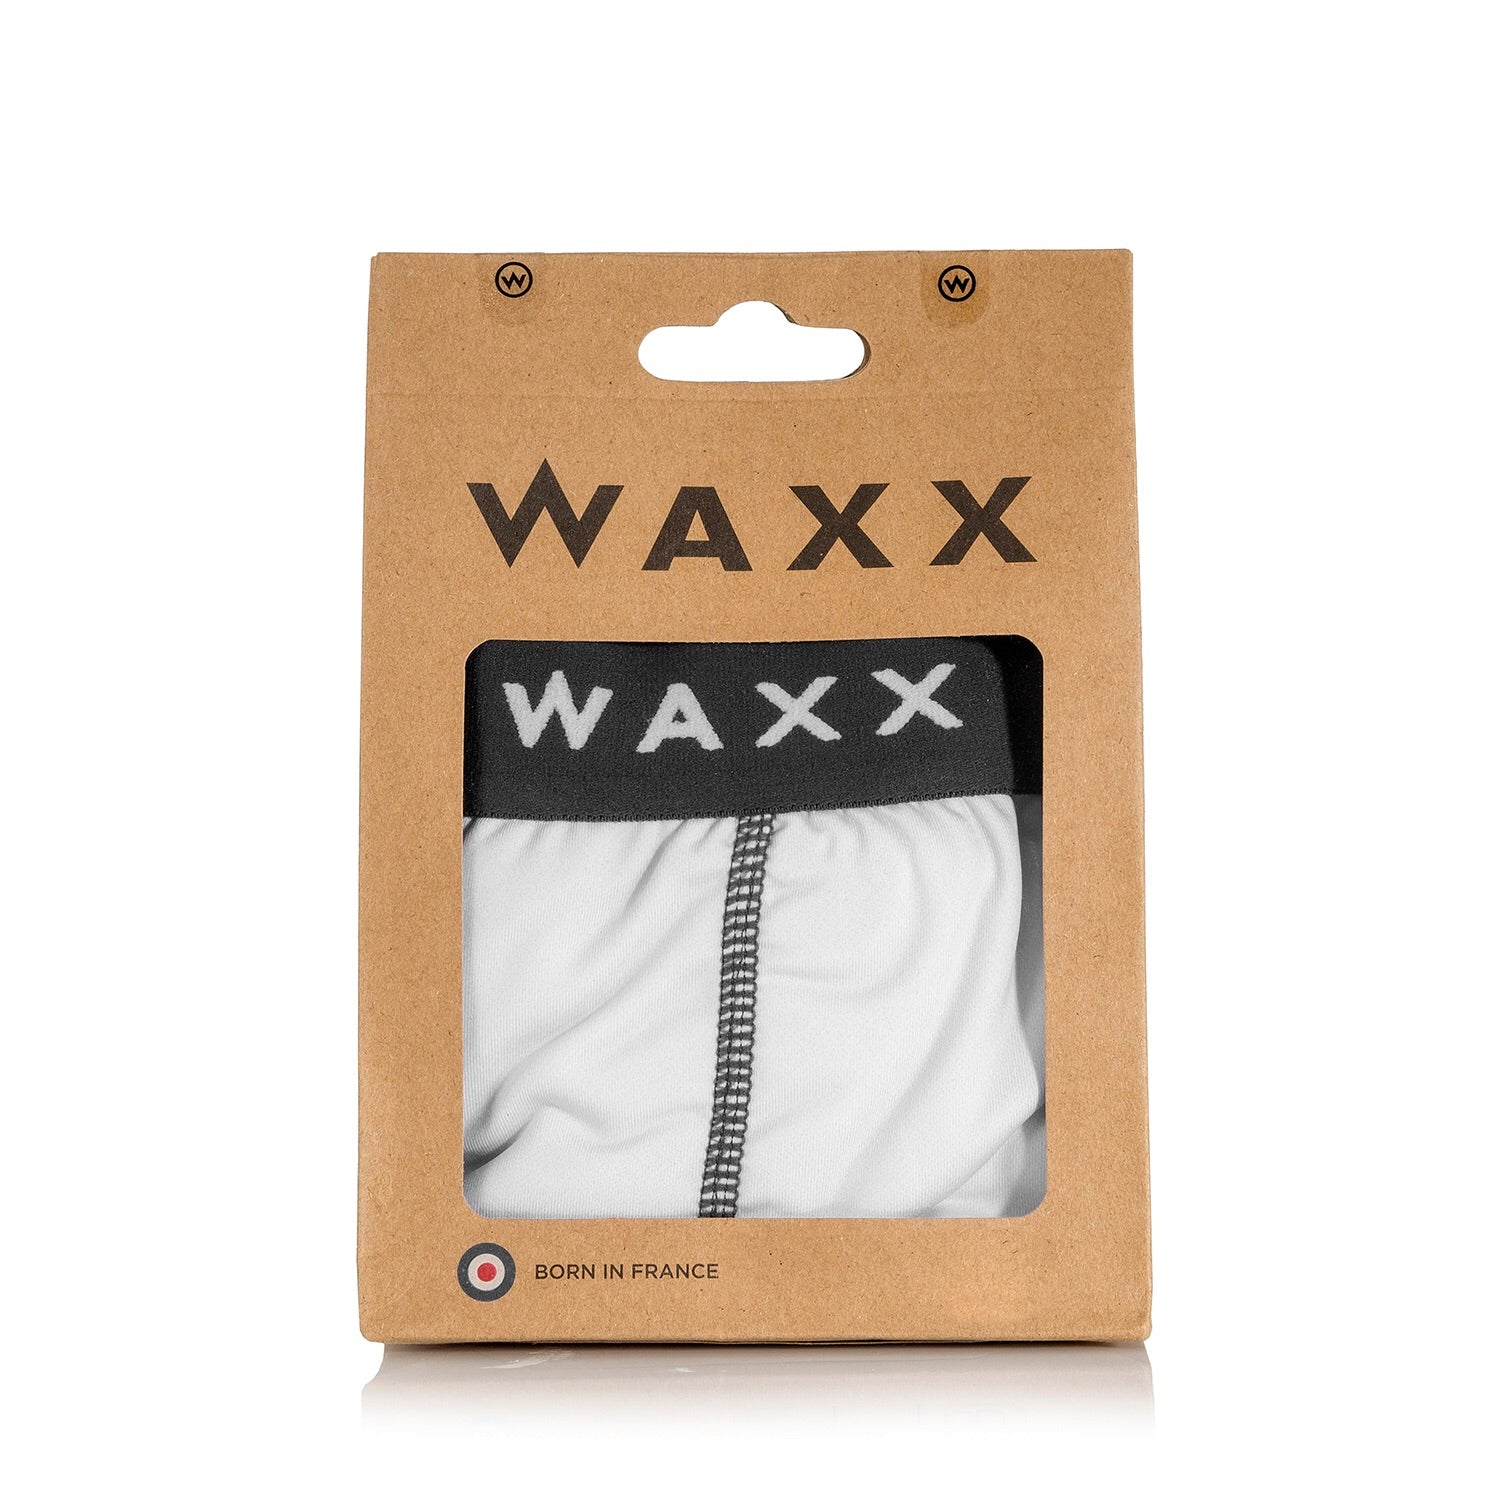 Waxx Women's Boy Short Caliente